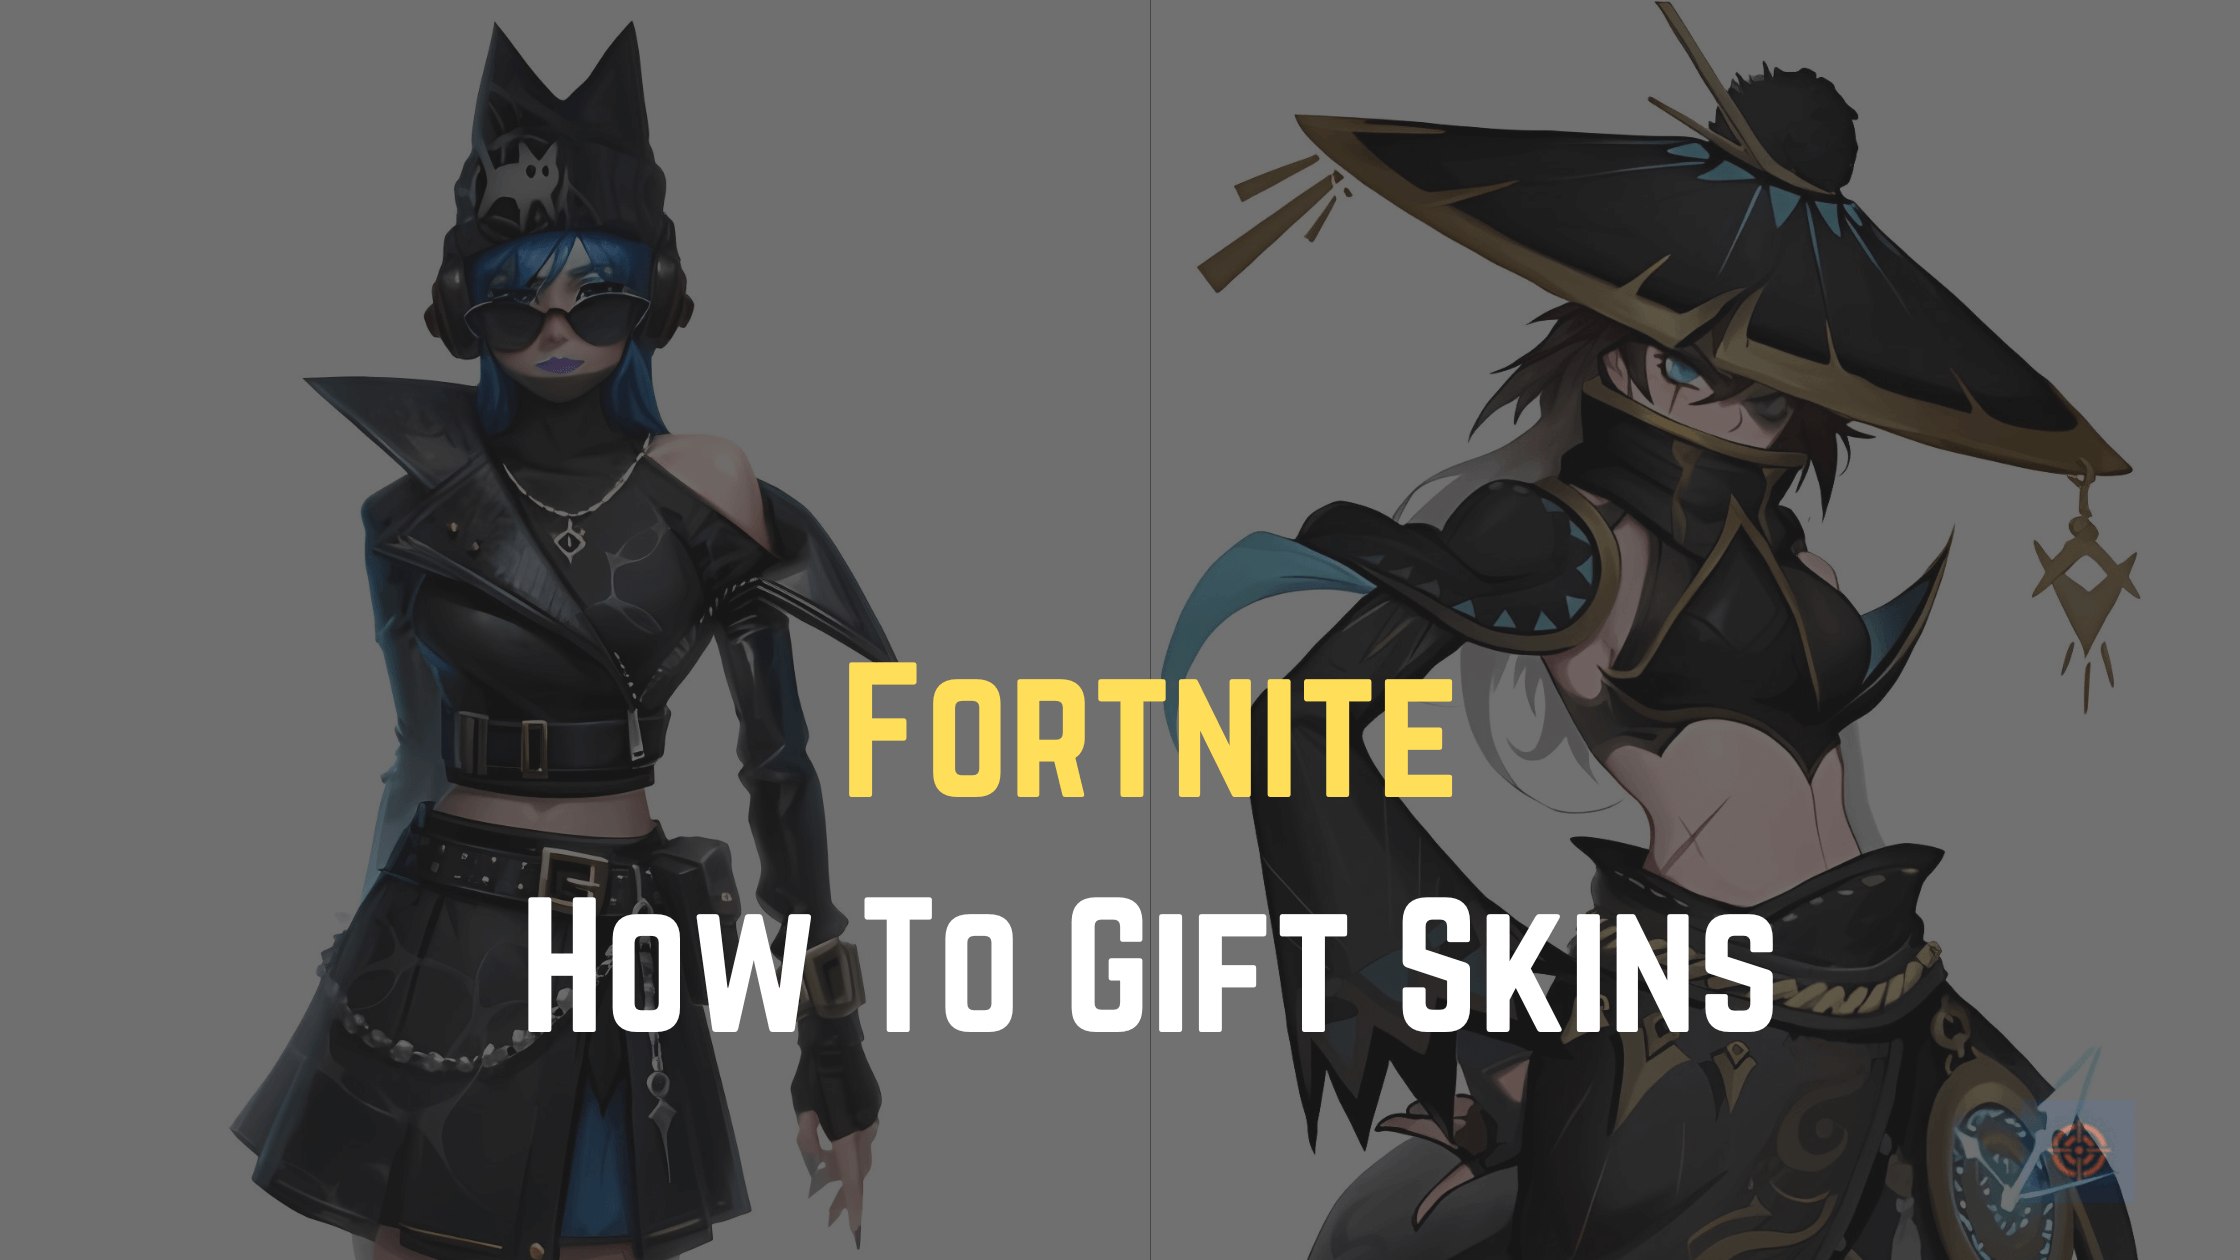 Gift Skins in Fortnite